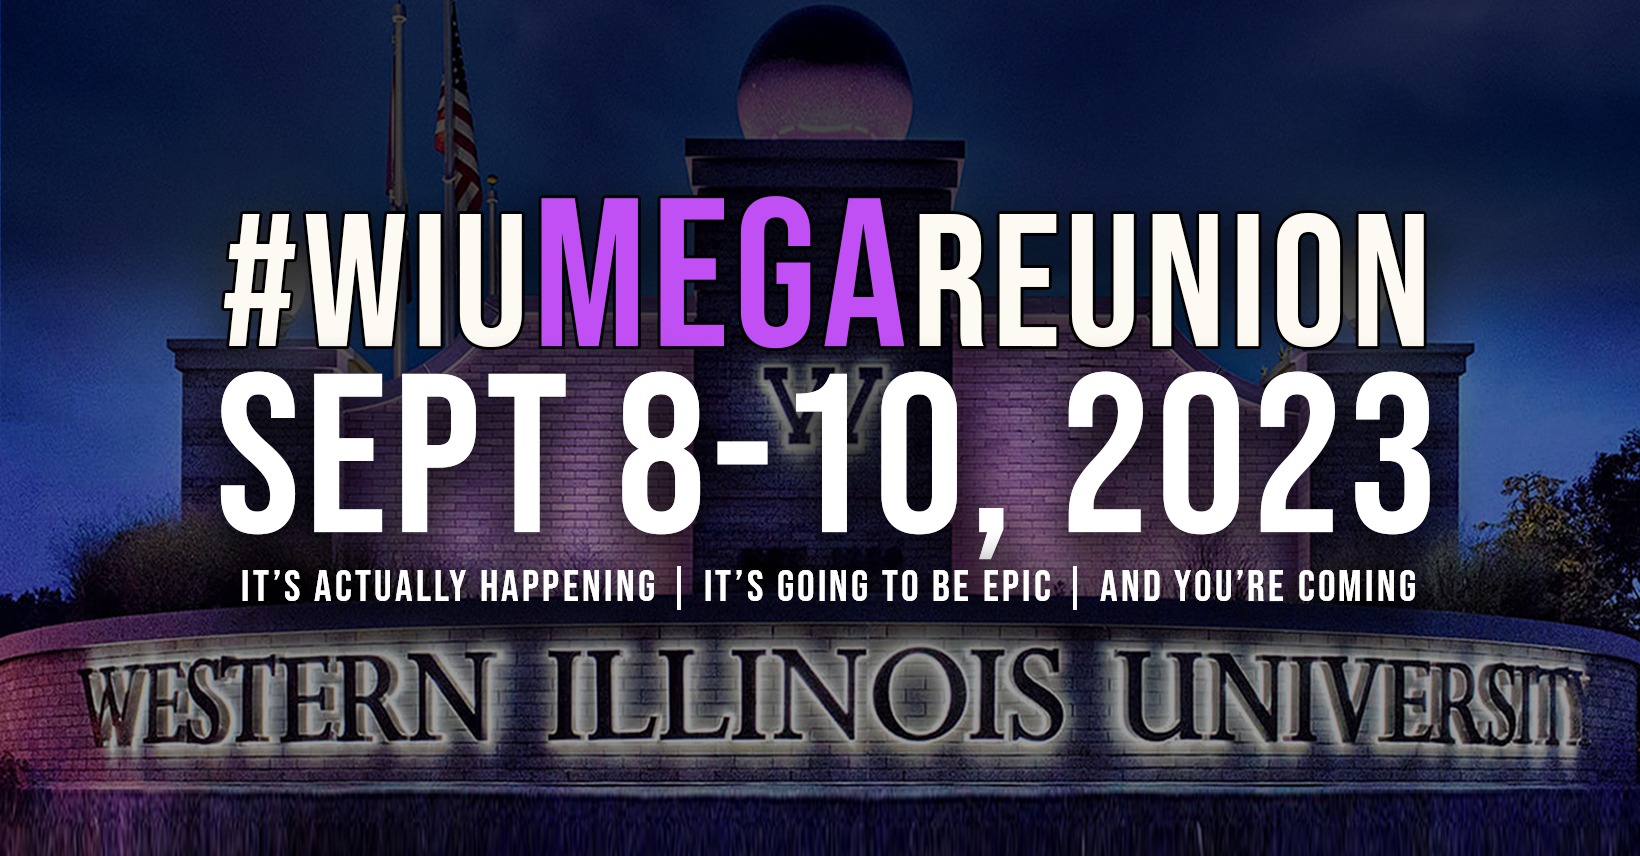 Mega Reunion Western Illinois University